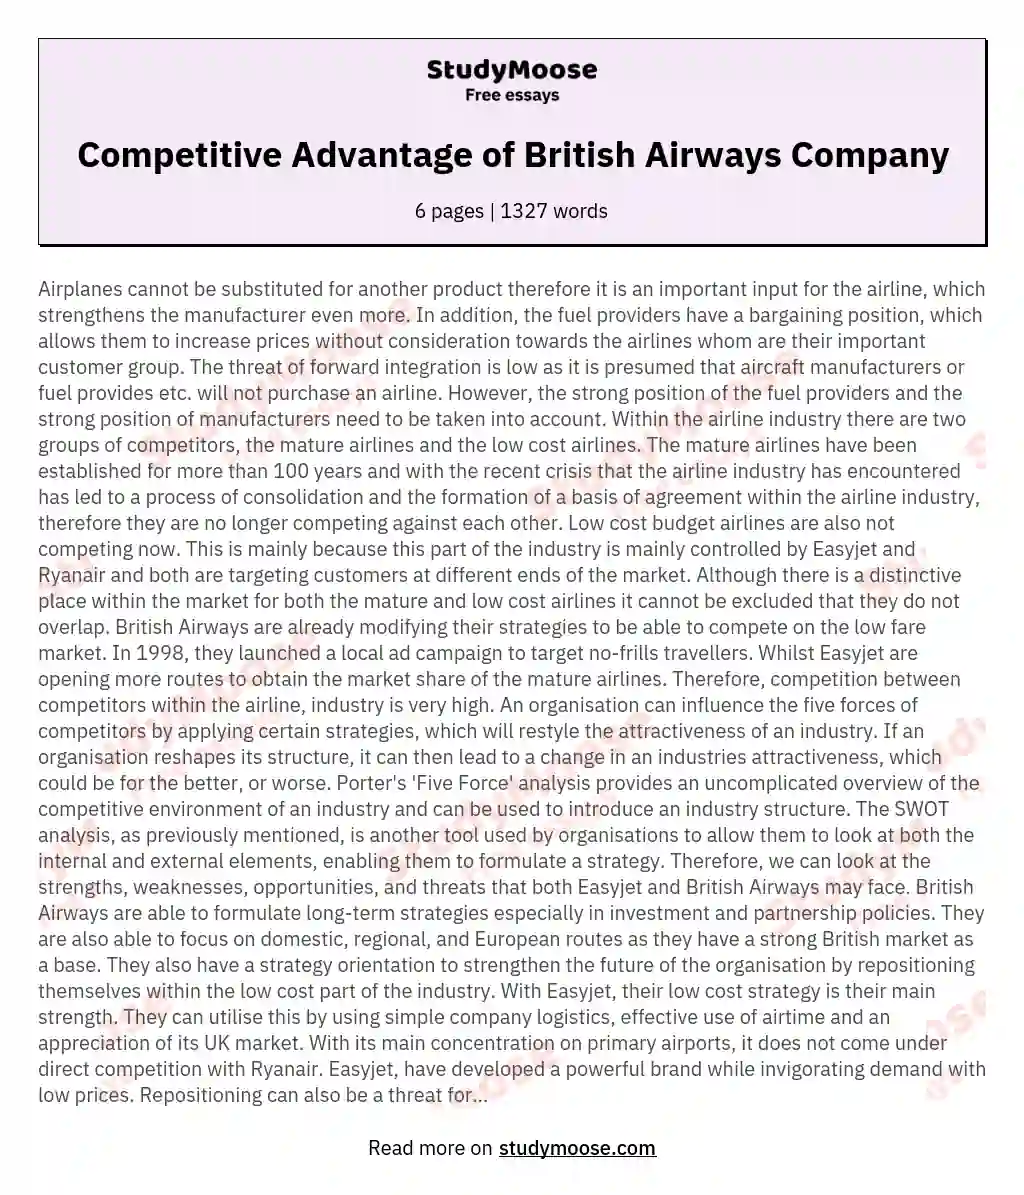 Competitive Advantage of British Airways Company essay